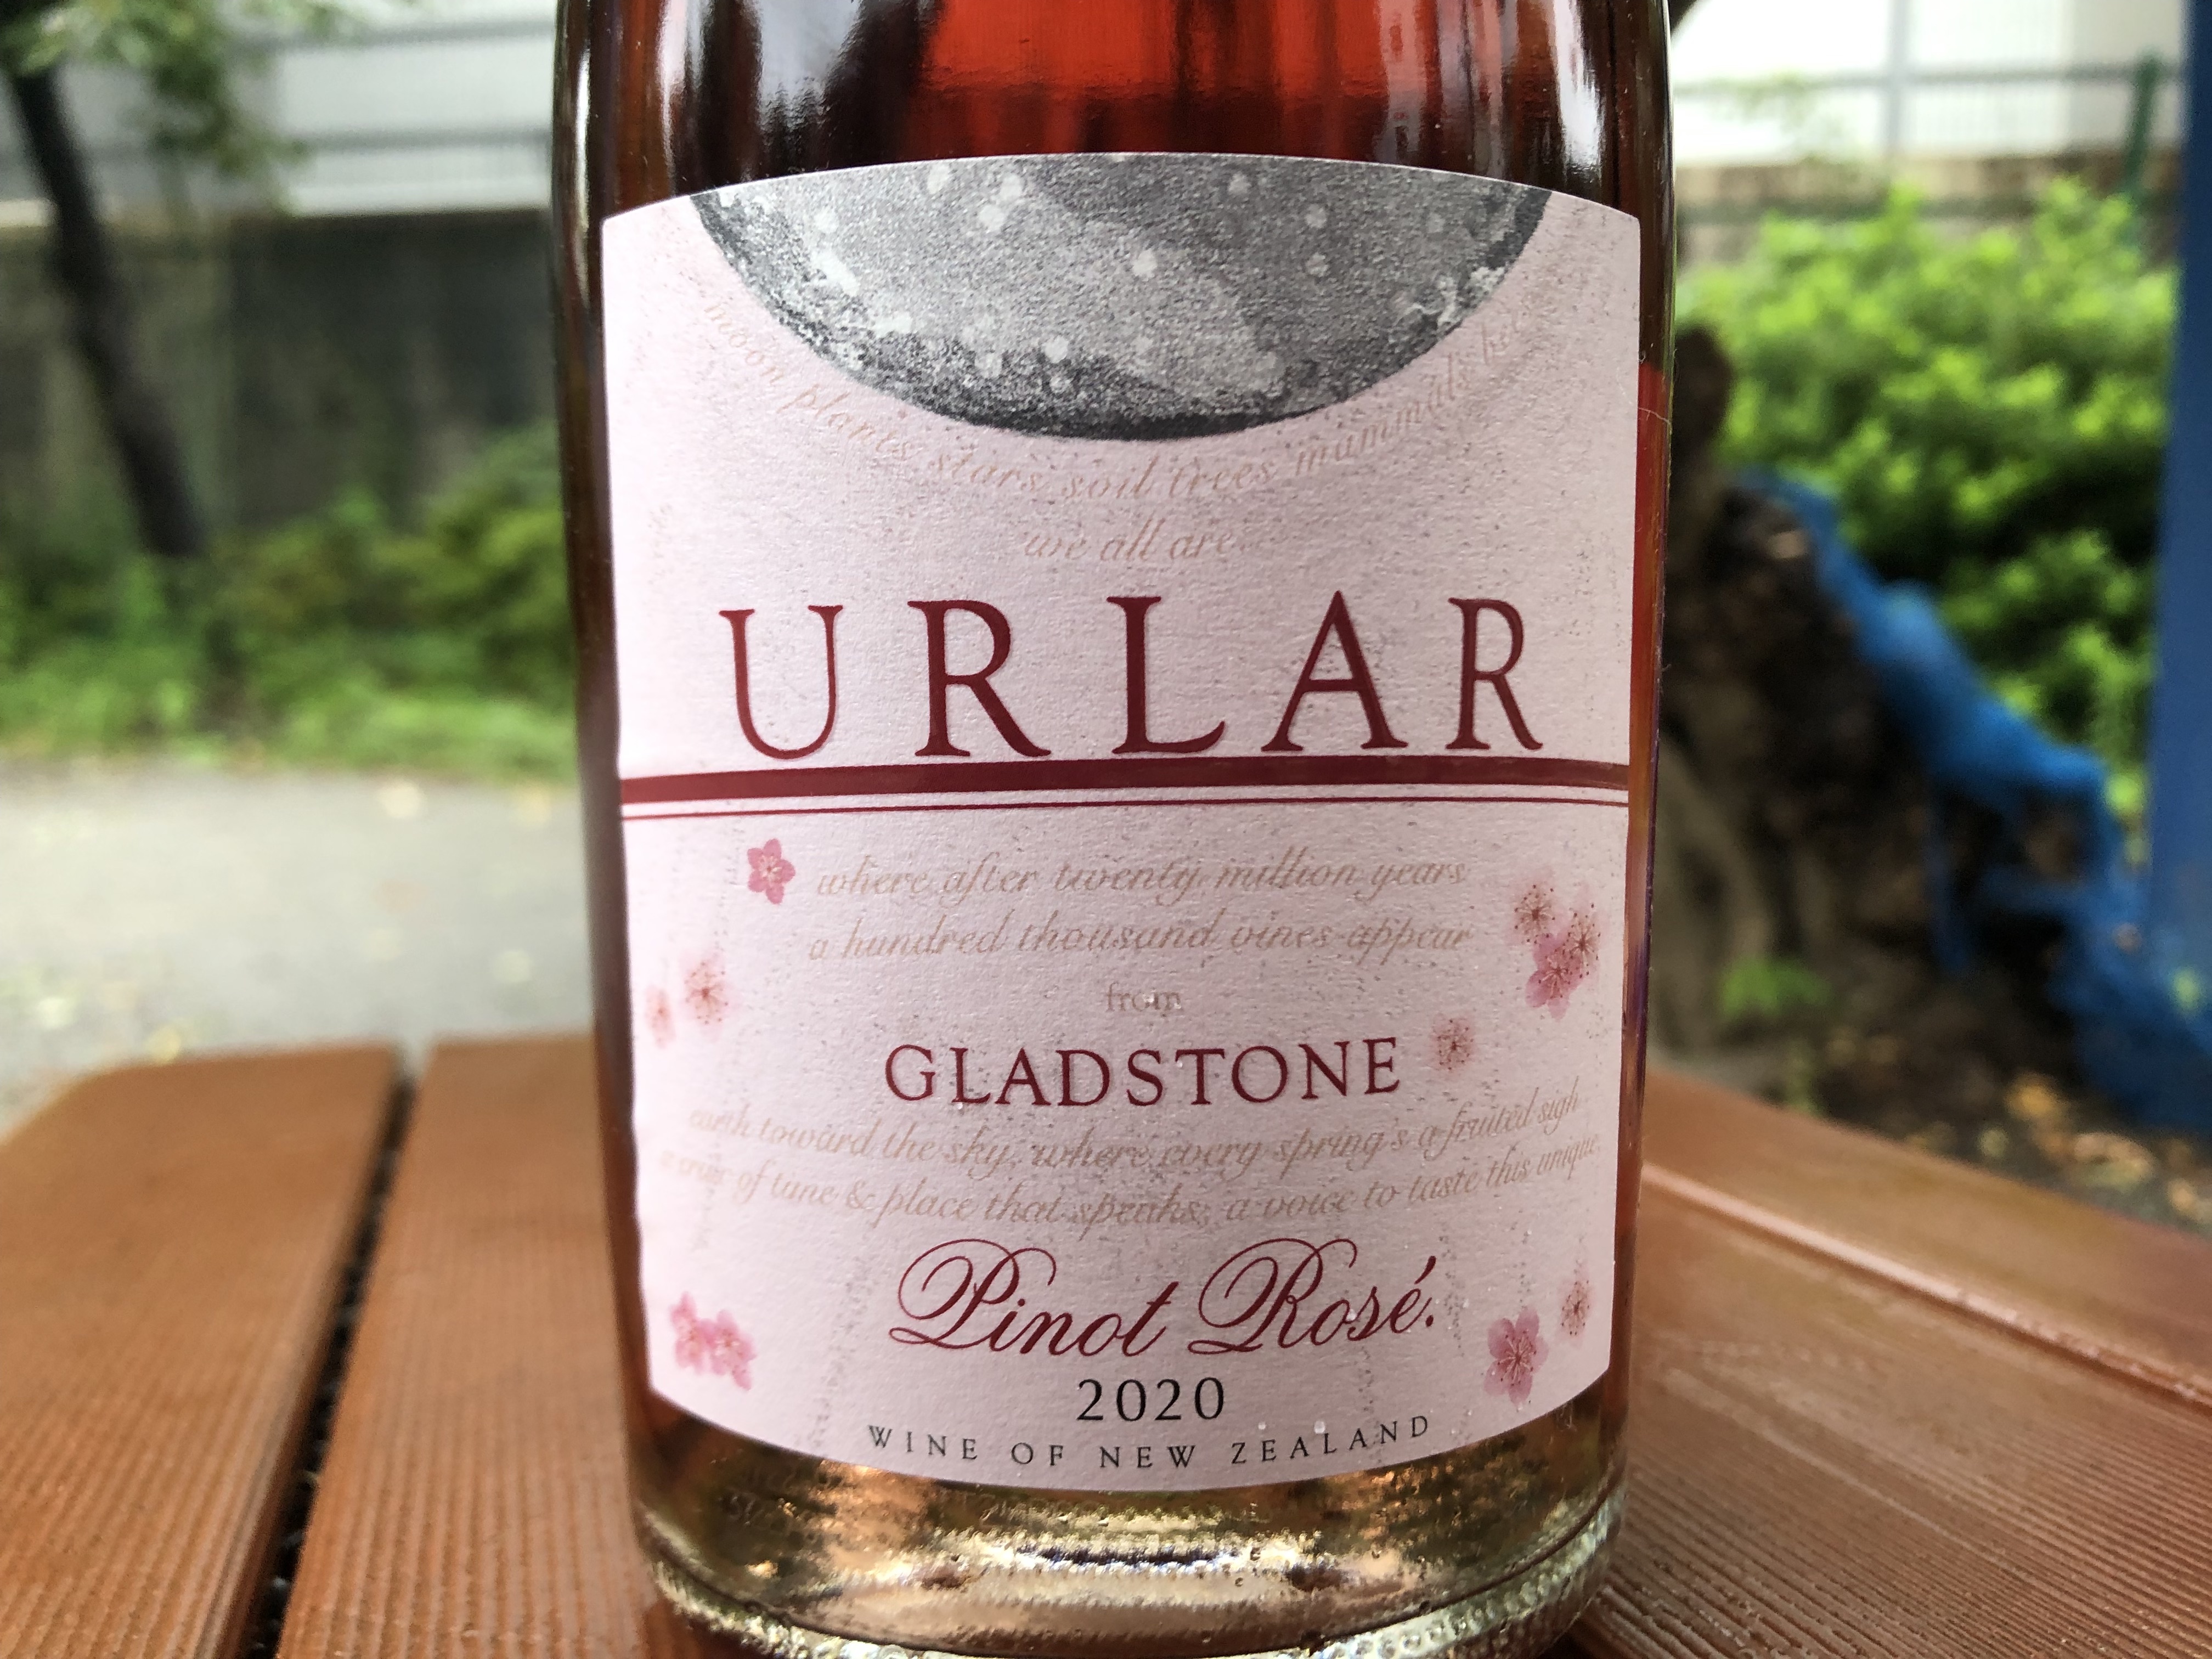 GLADSTONE URLAR Pinot Rose 2020